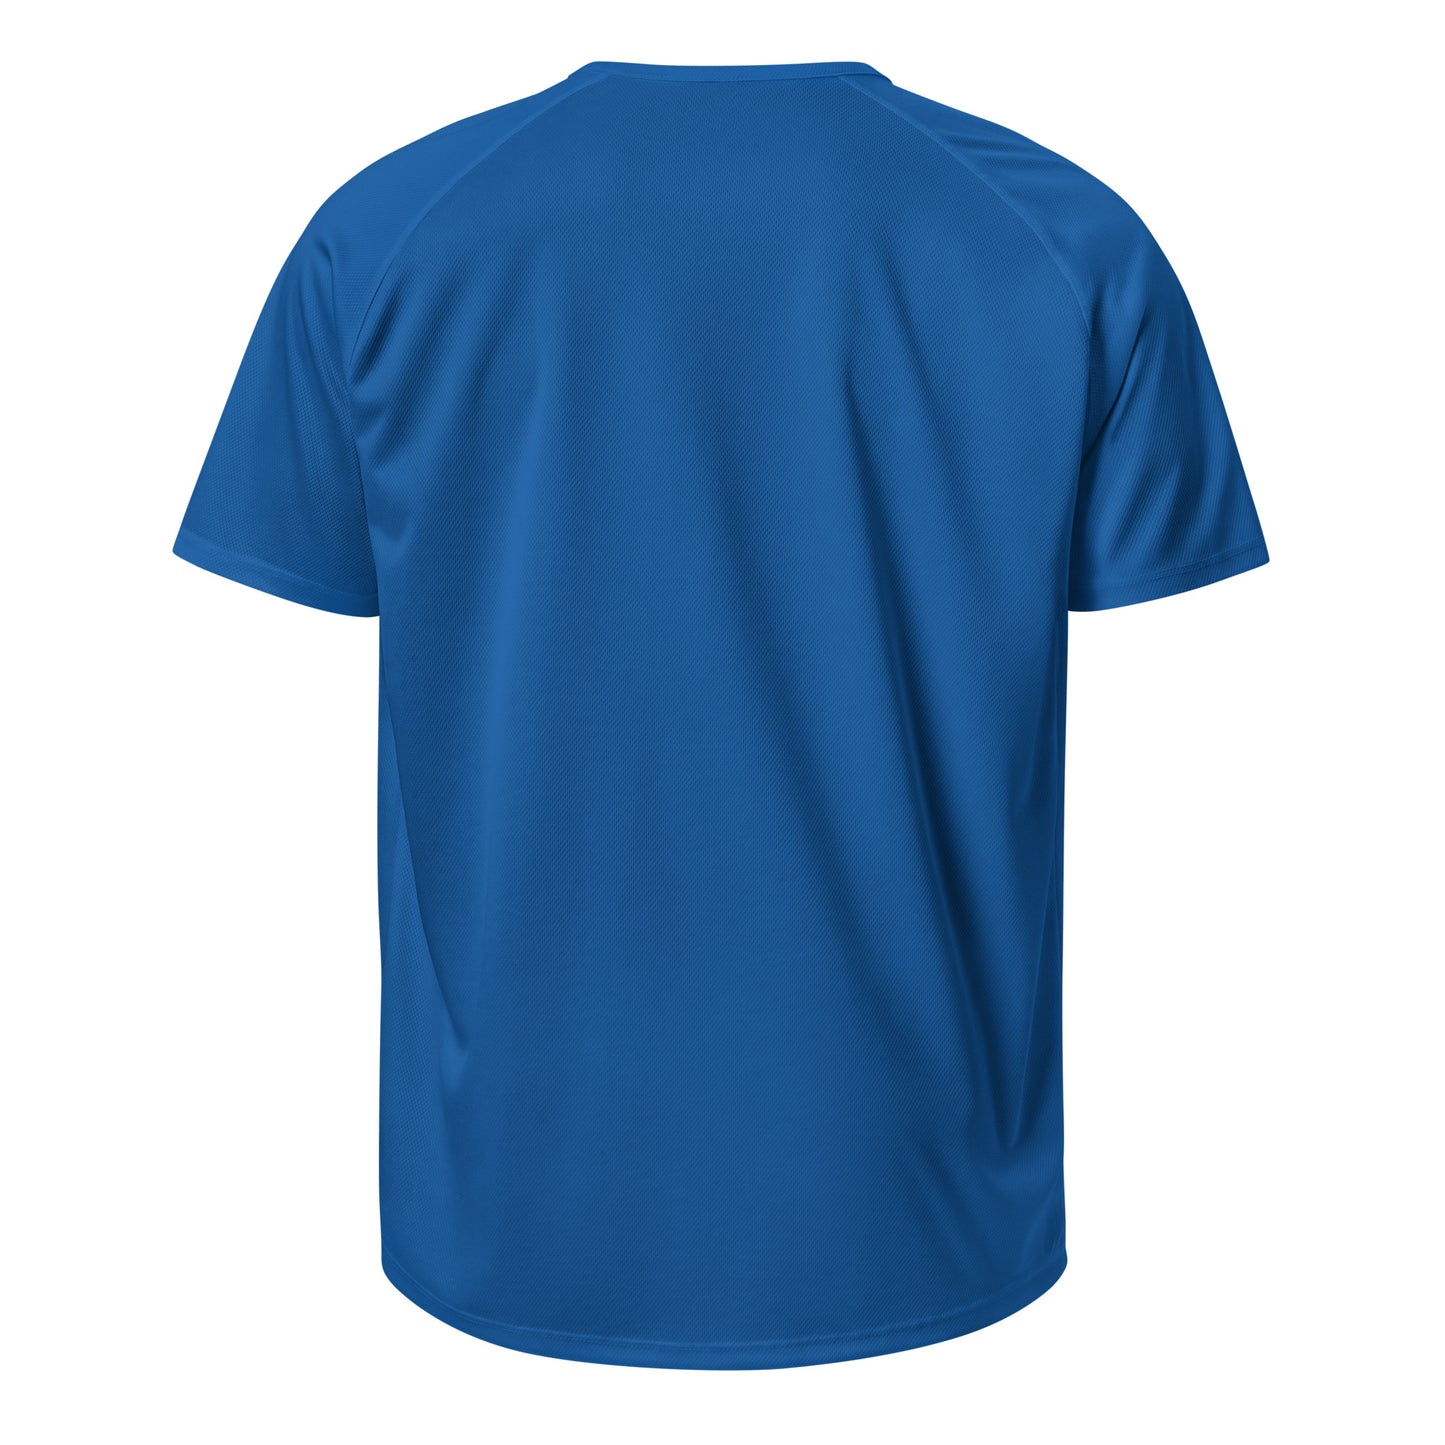 E113 - Sports/Breathable Fabric (Universal jump : Blue)